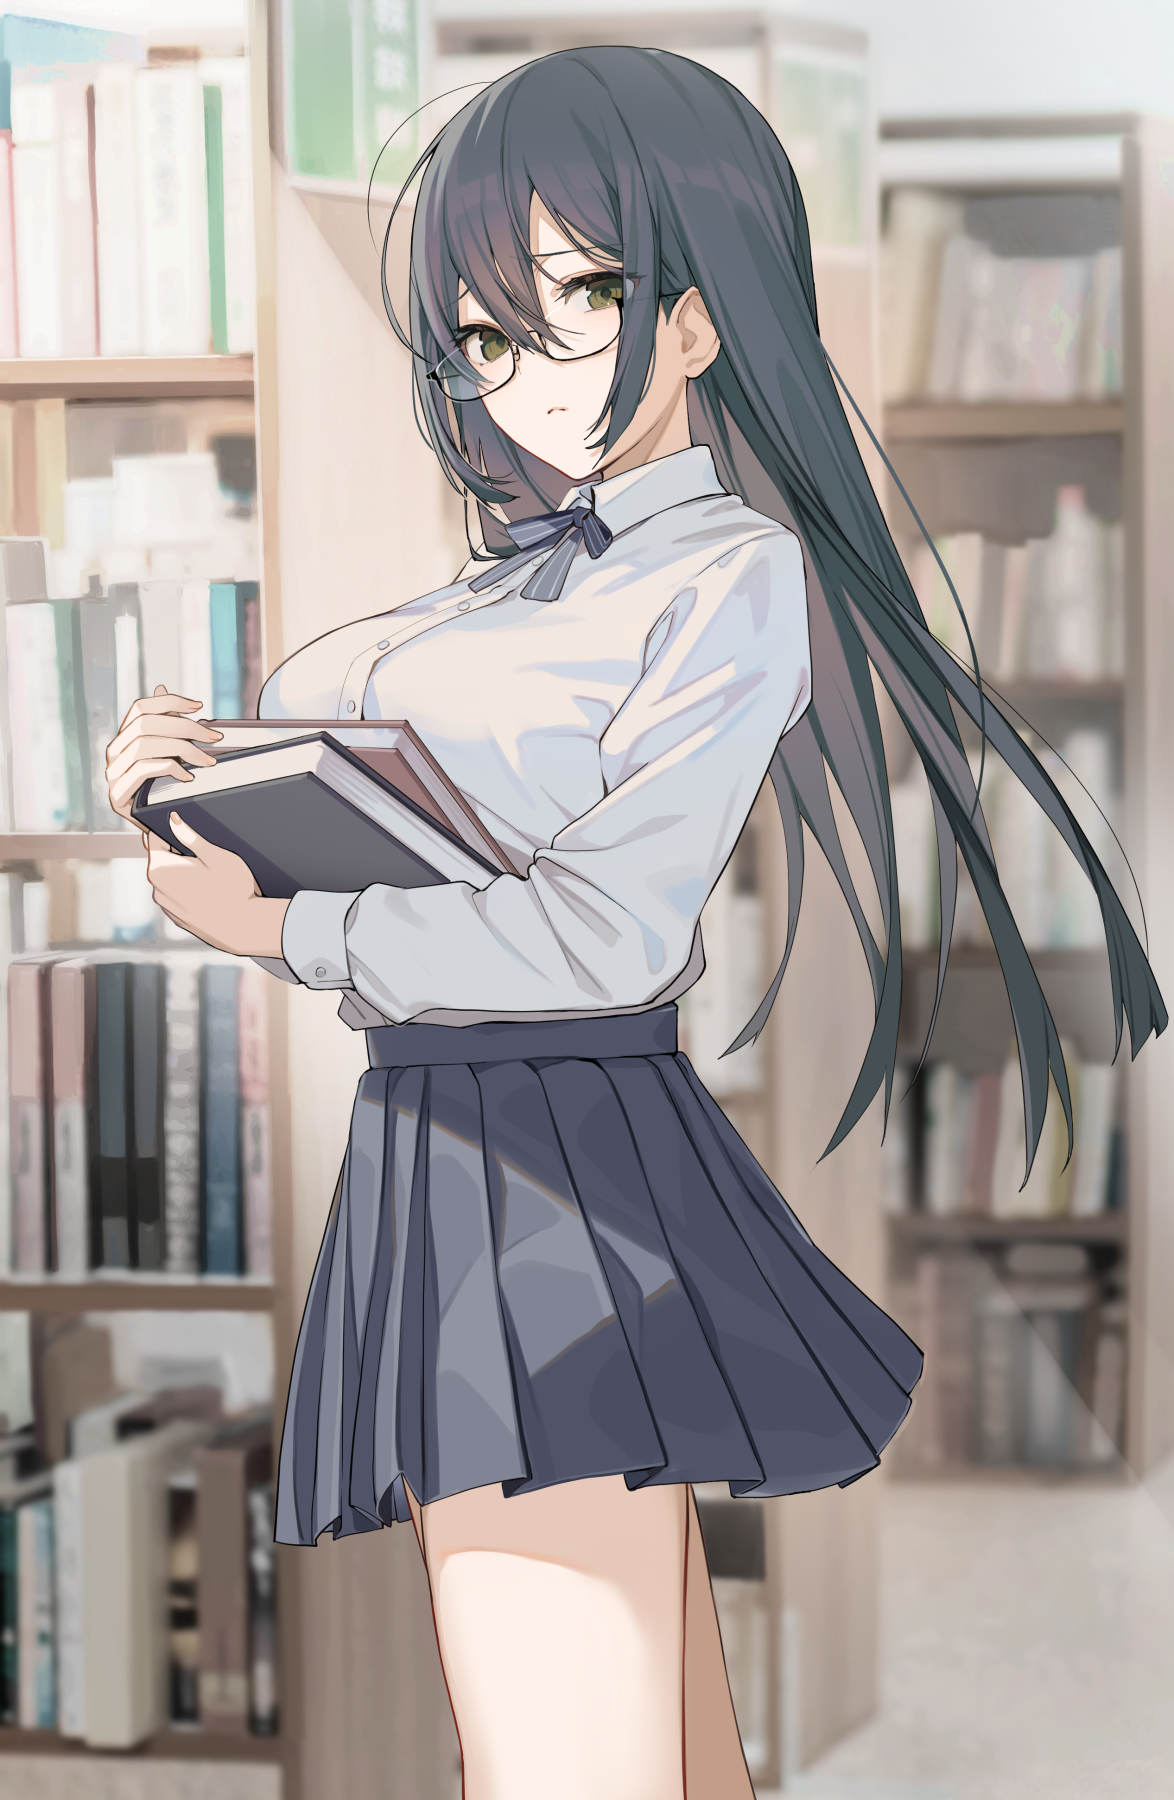 Anime 1174x1800 anime anime girls Icomochi library school uniform glasses